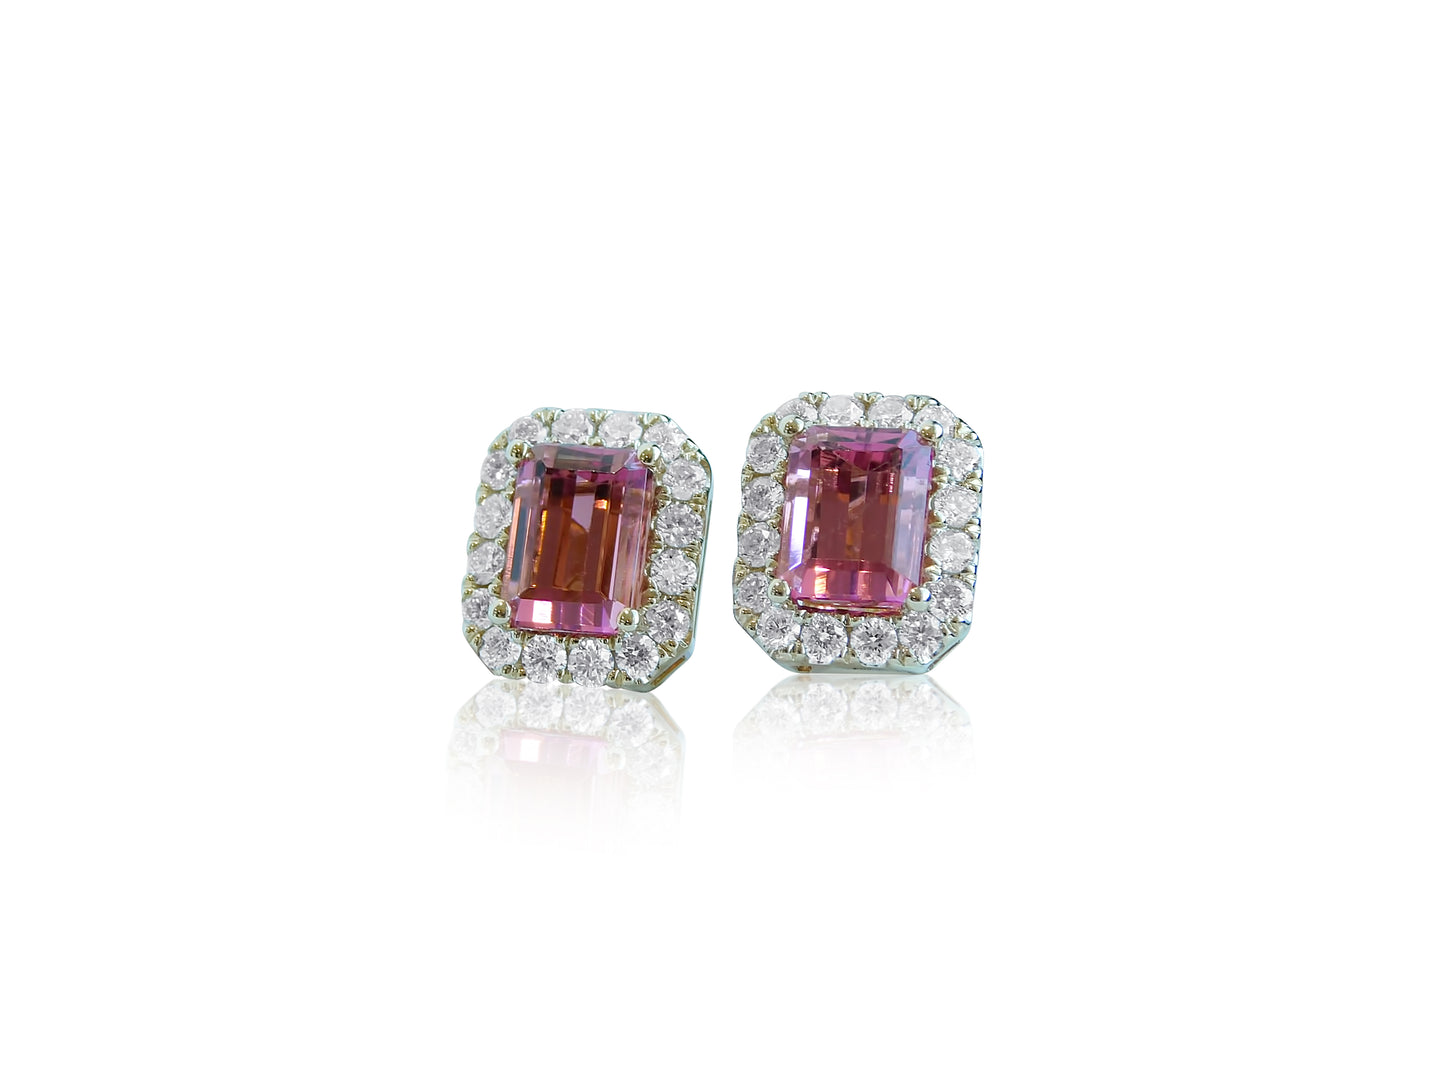 Vivid Pink Gemstone and Diamond Earrings